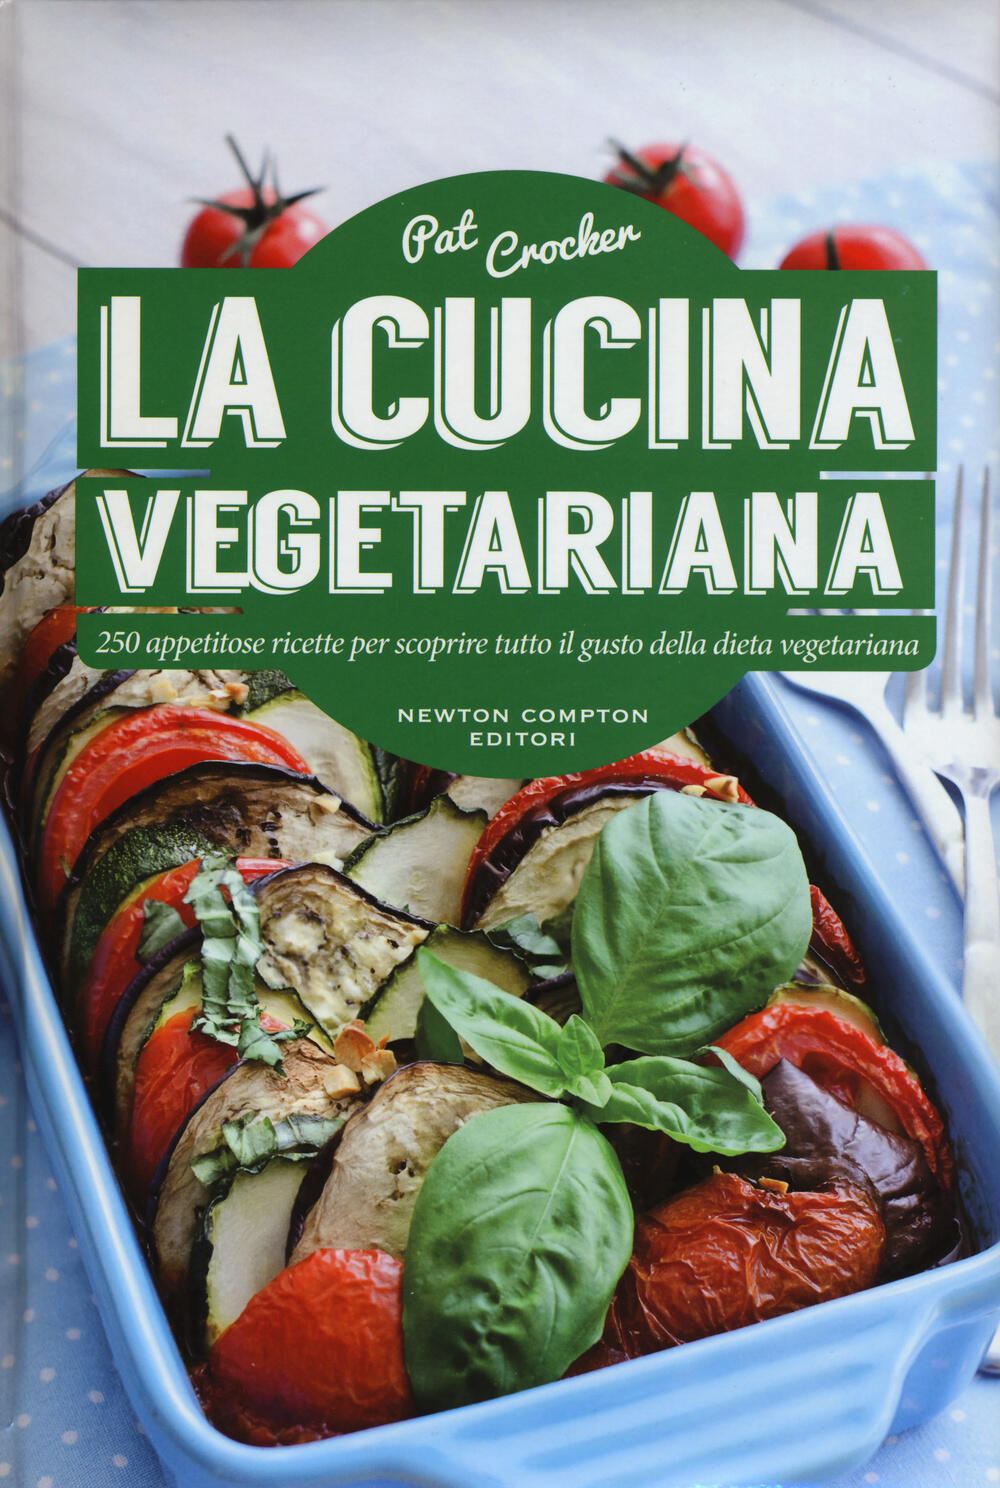 La Cucina Vegetariana Pat Crocker Libro Newton Compton Editori Manuali Di Cucina Ibs